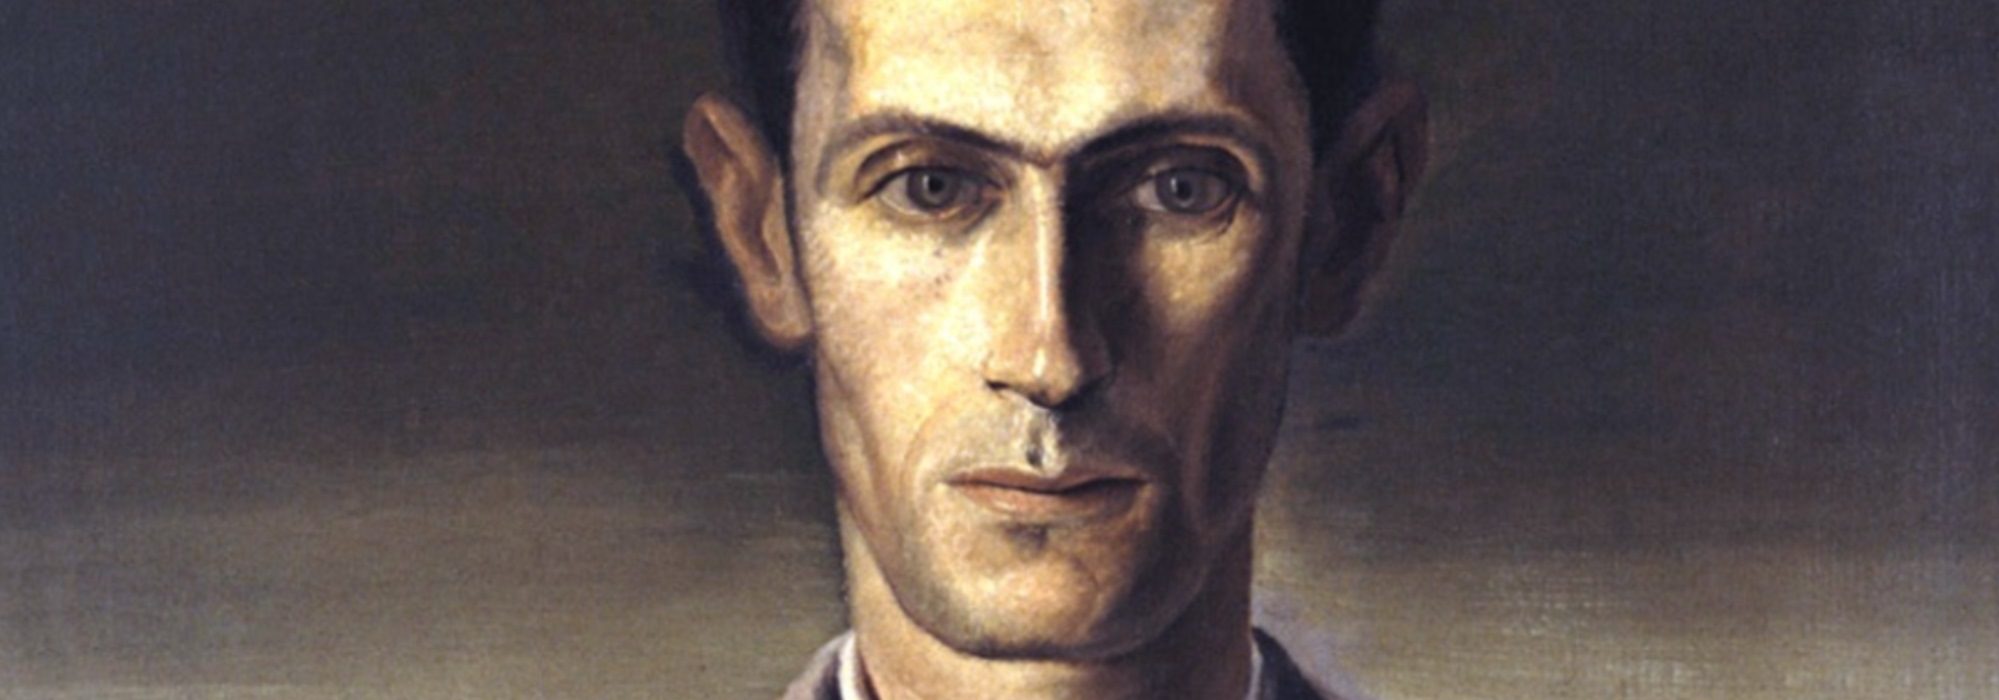 Imagem: Retrato de Carlos Drummond de Andrade (Portinari, 1936, detalhe)